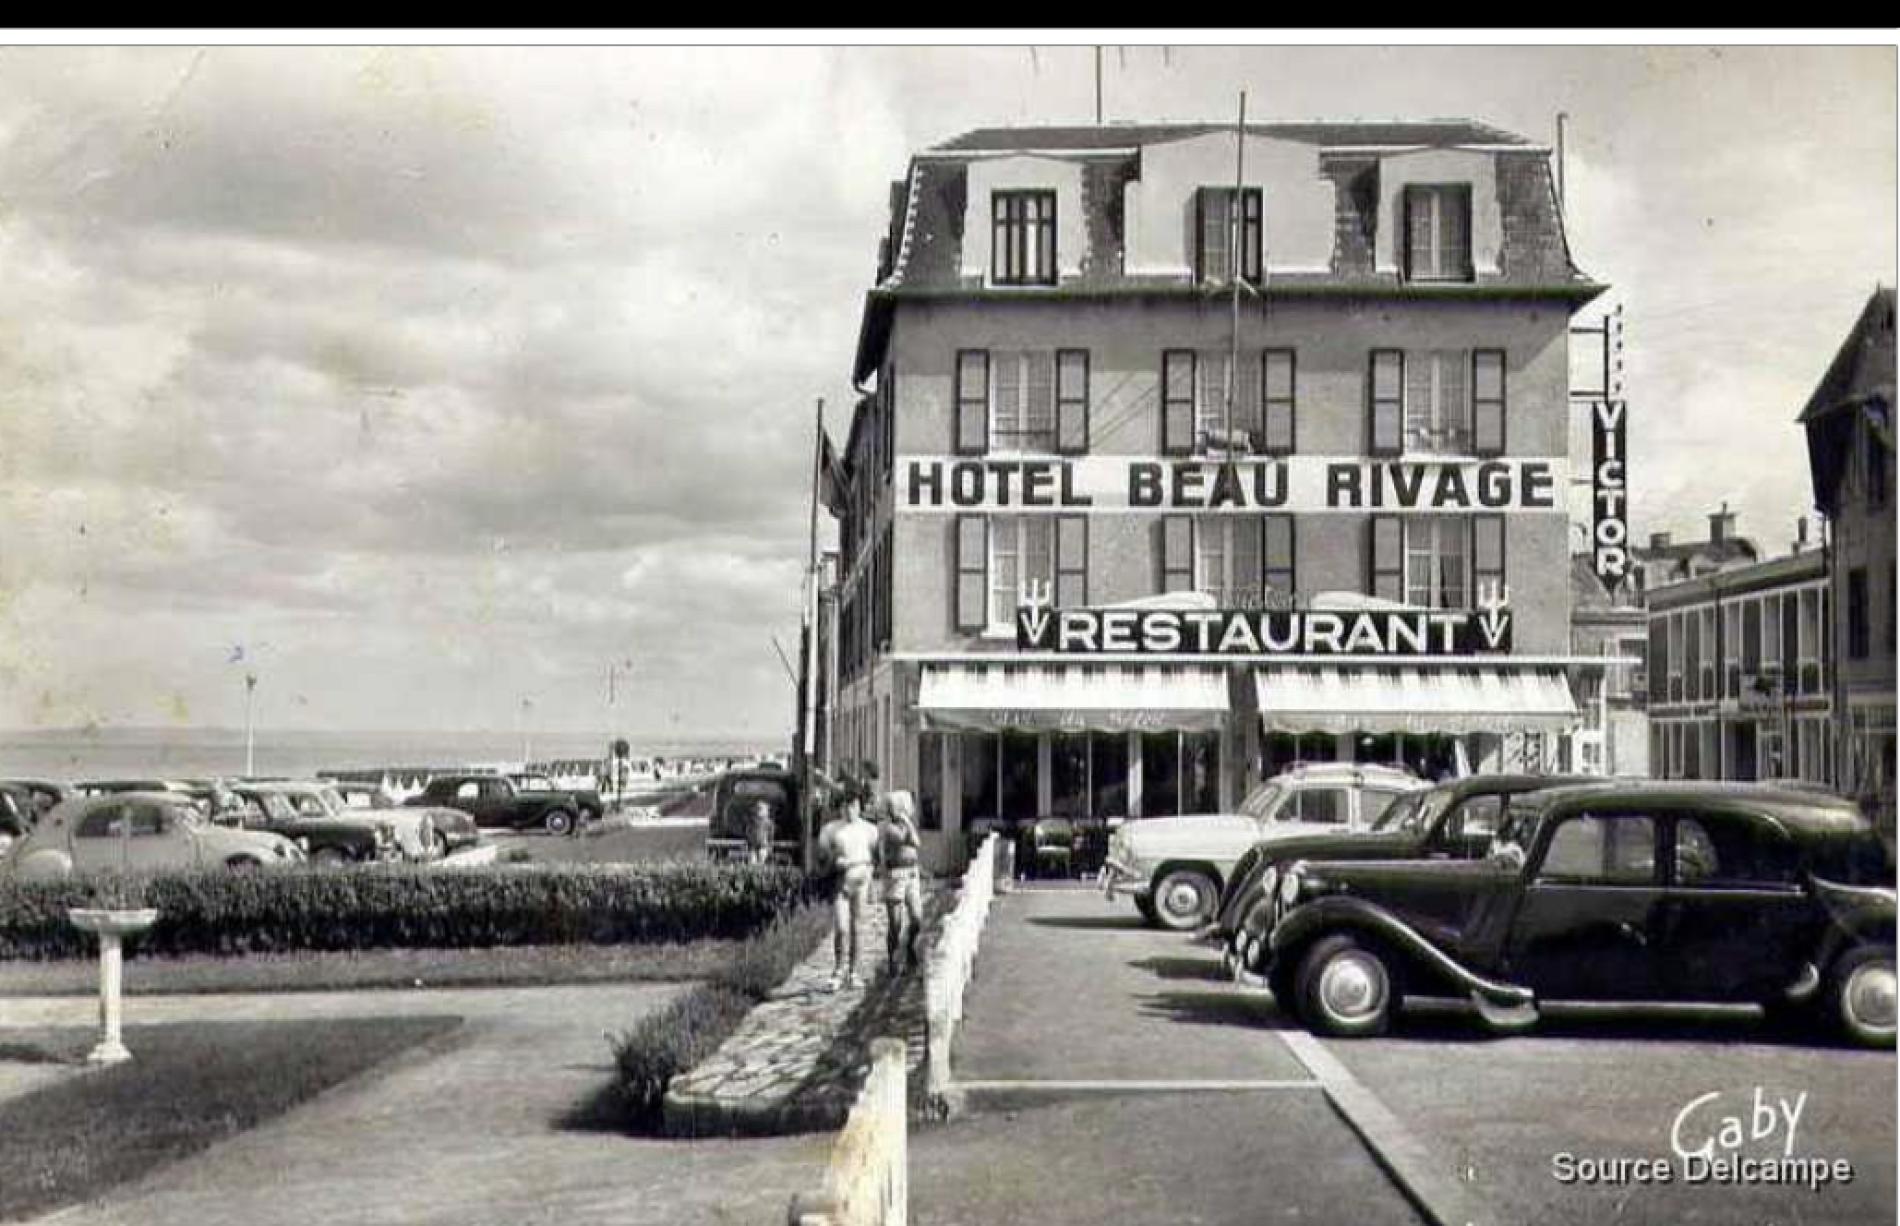 Le Beau Rivage - Hotel en Normandie